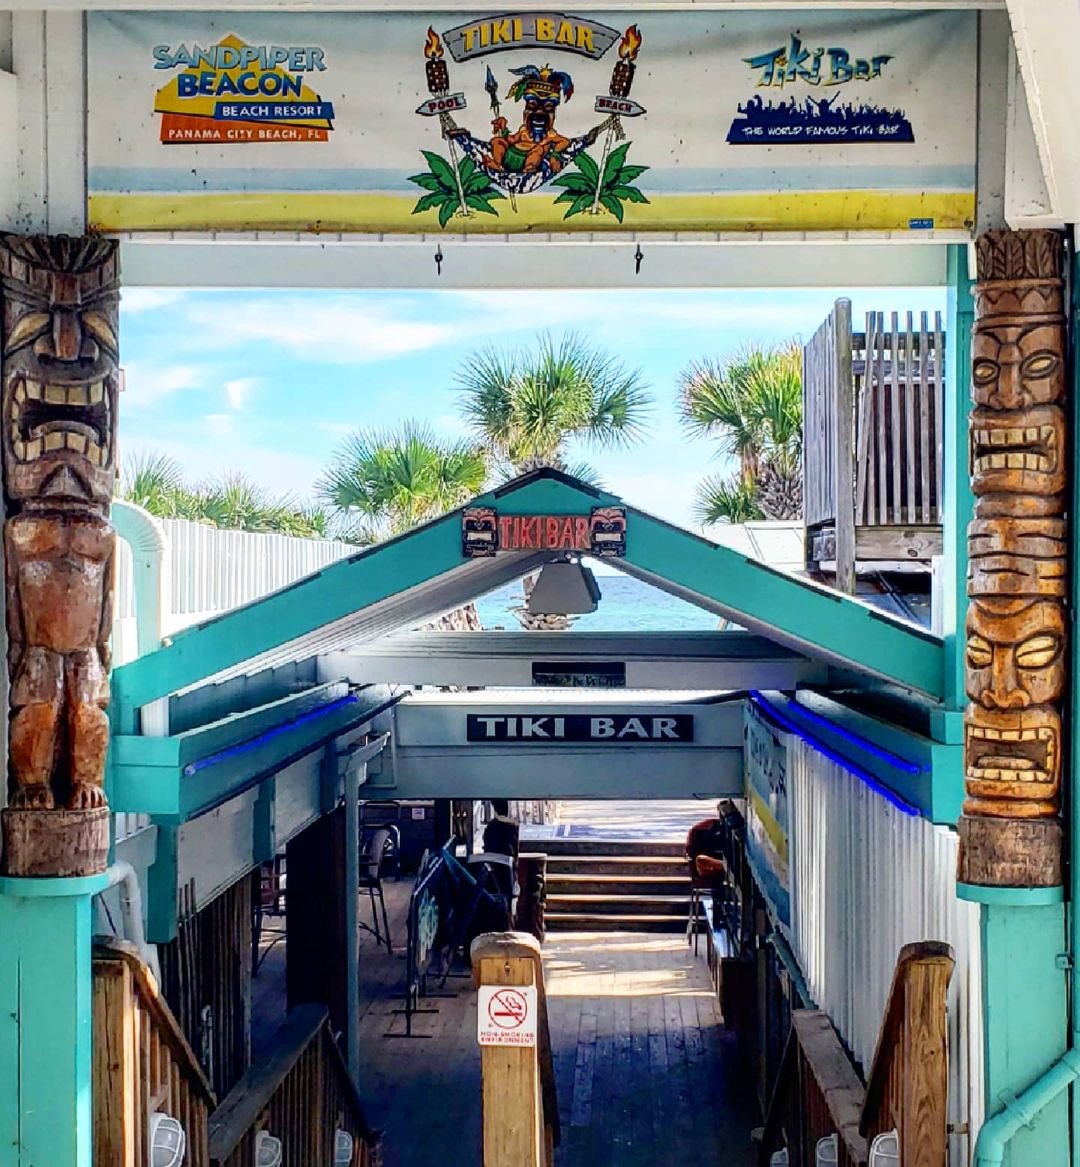 Panama City Beach Things To Do - Tiki Bar at the Sandpiper Beacon - Original Photo